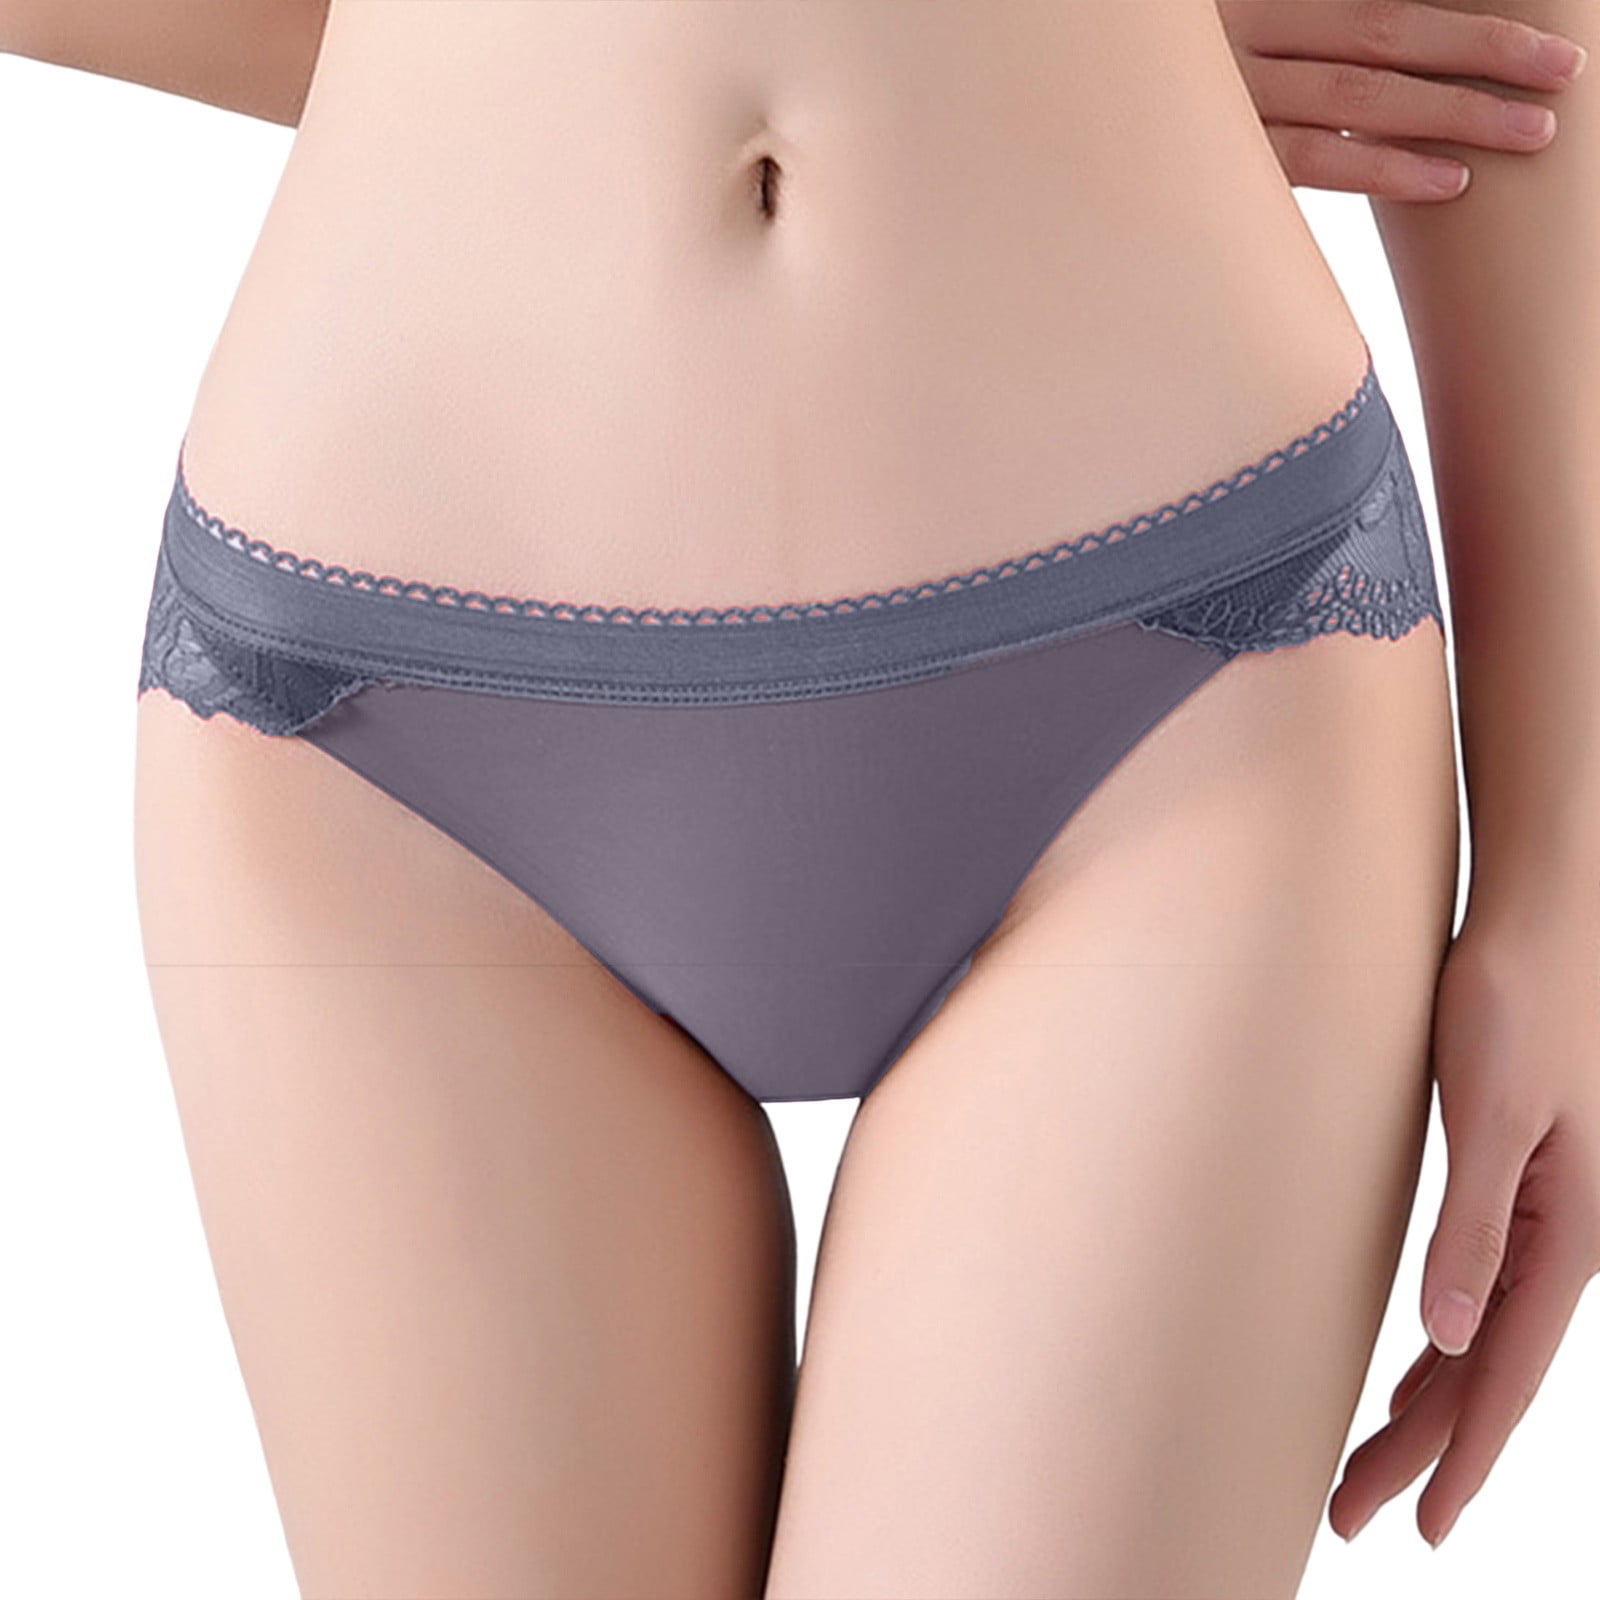 KaLI_store Ladies Panties Women's Cotton Stretch Underwear Soft